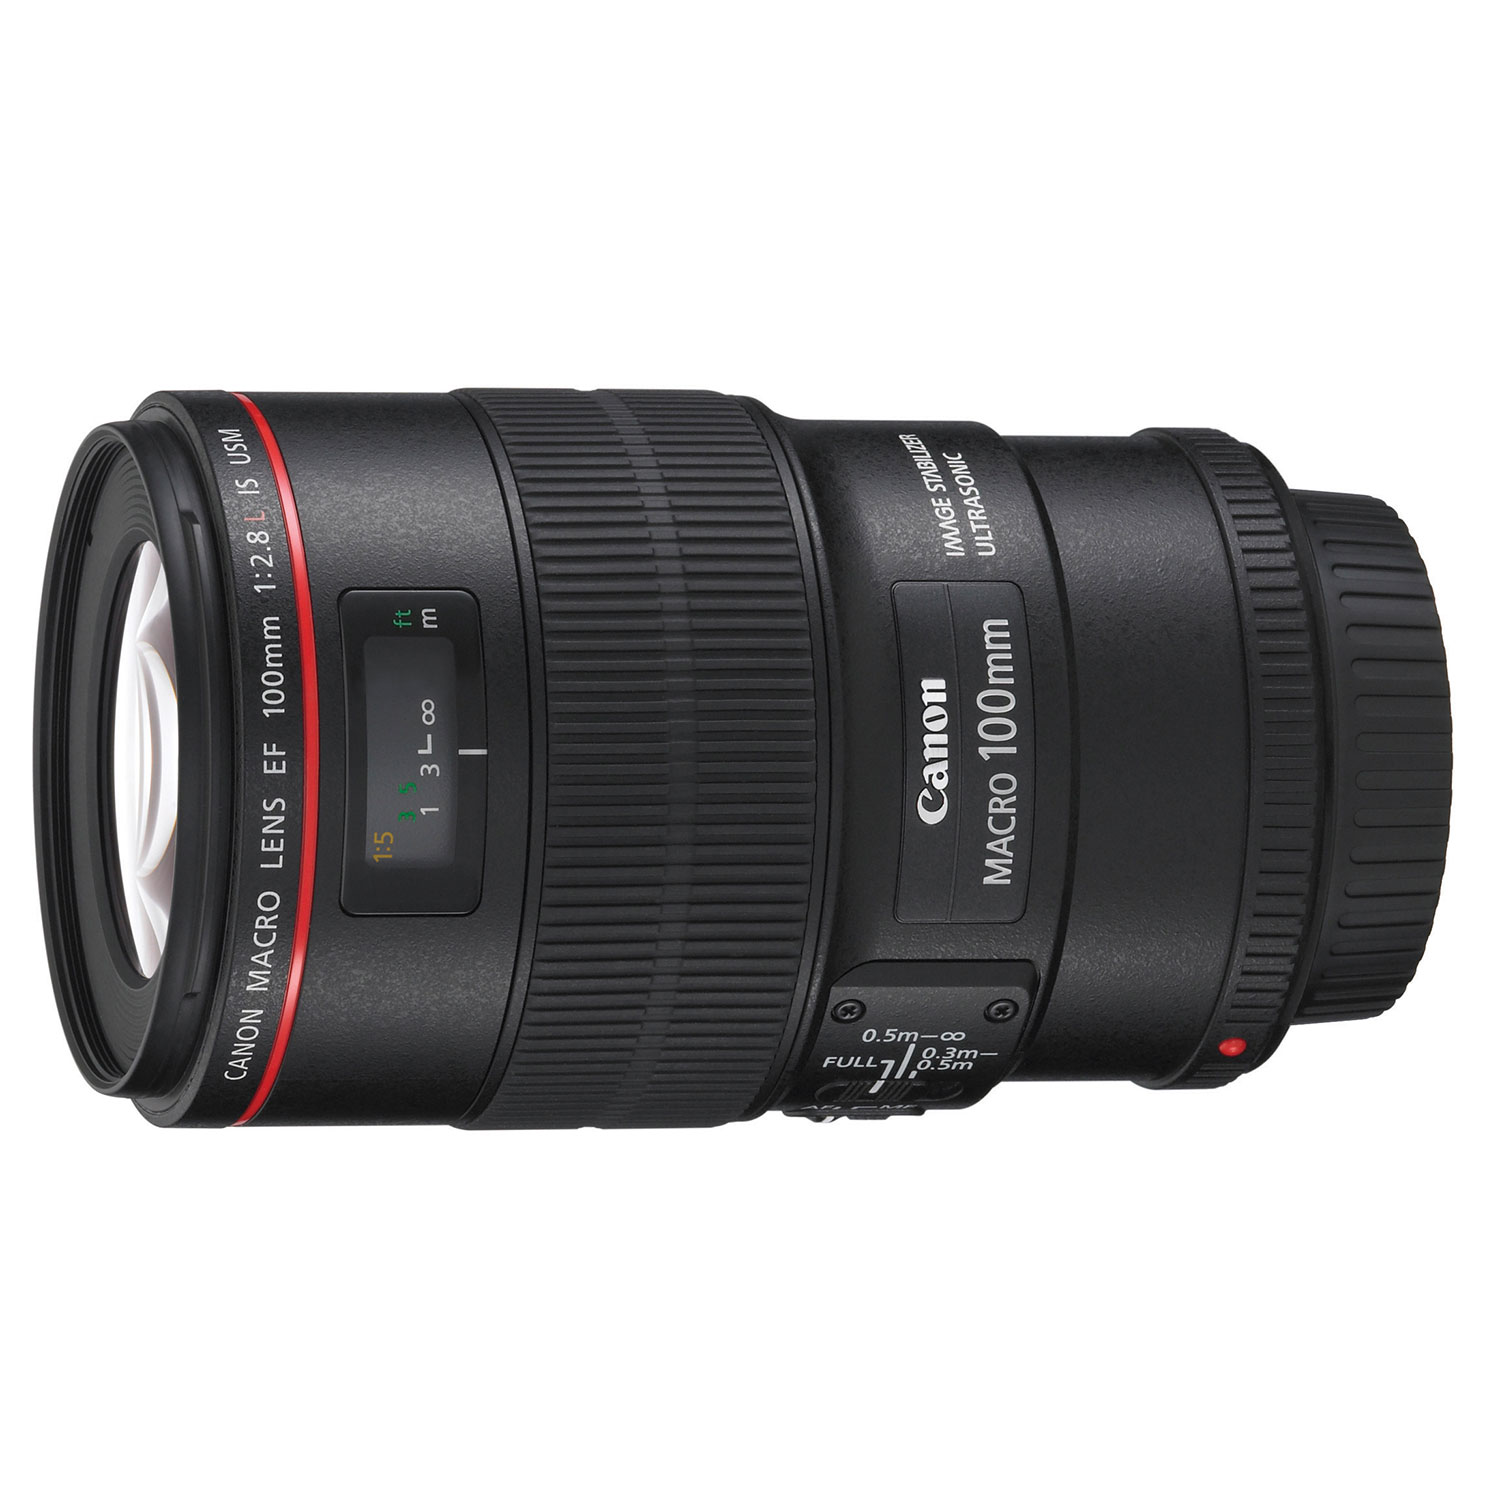 Canon EF 100mm f/2.8 IS USM Macro Lens | Best Buy Canada